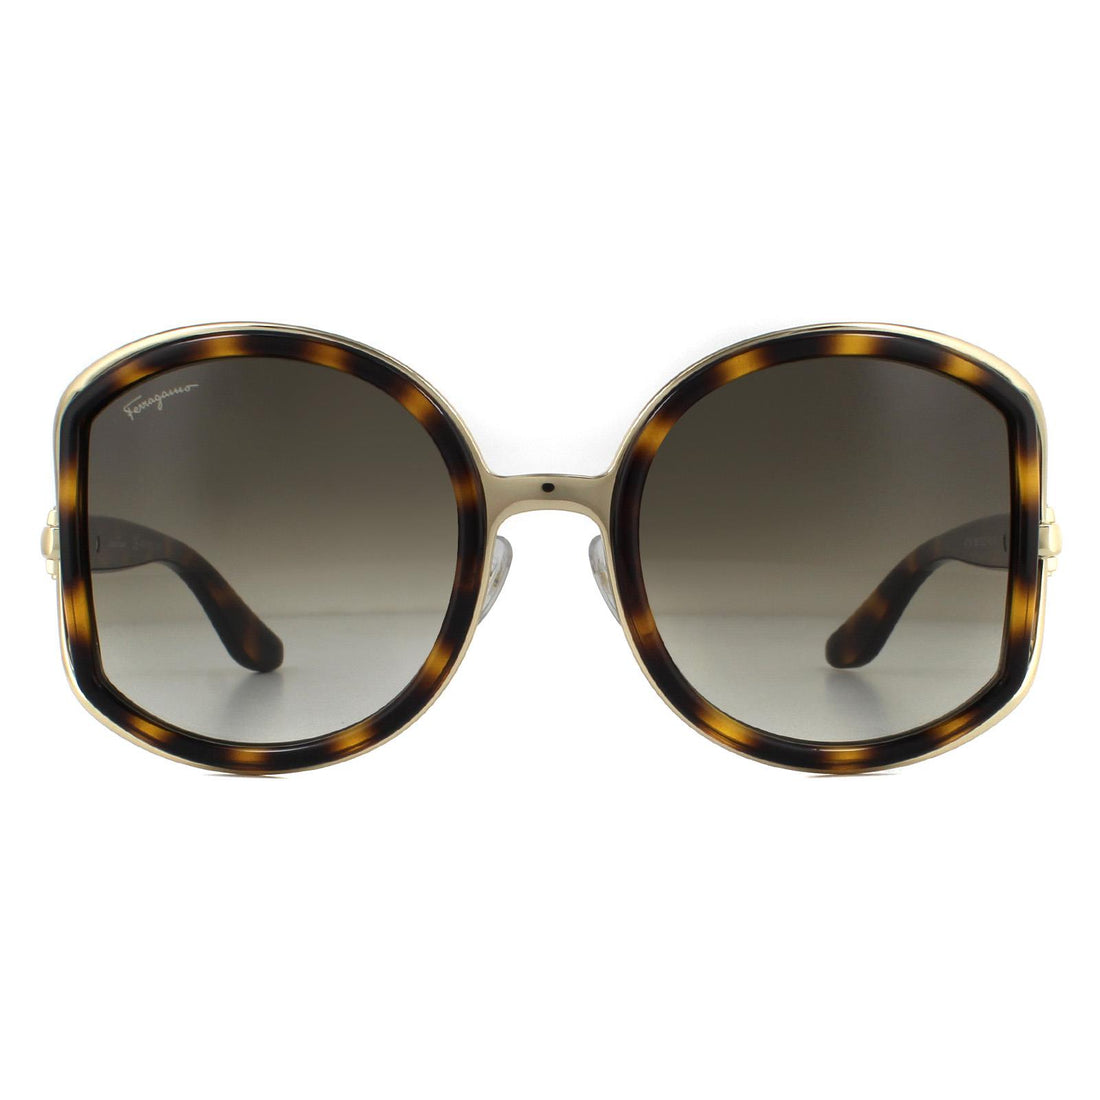 Salvatore Ferragamo SF719S Sunglasses Dark Tortoise / Brown Gradient